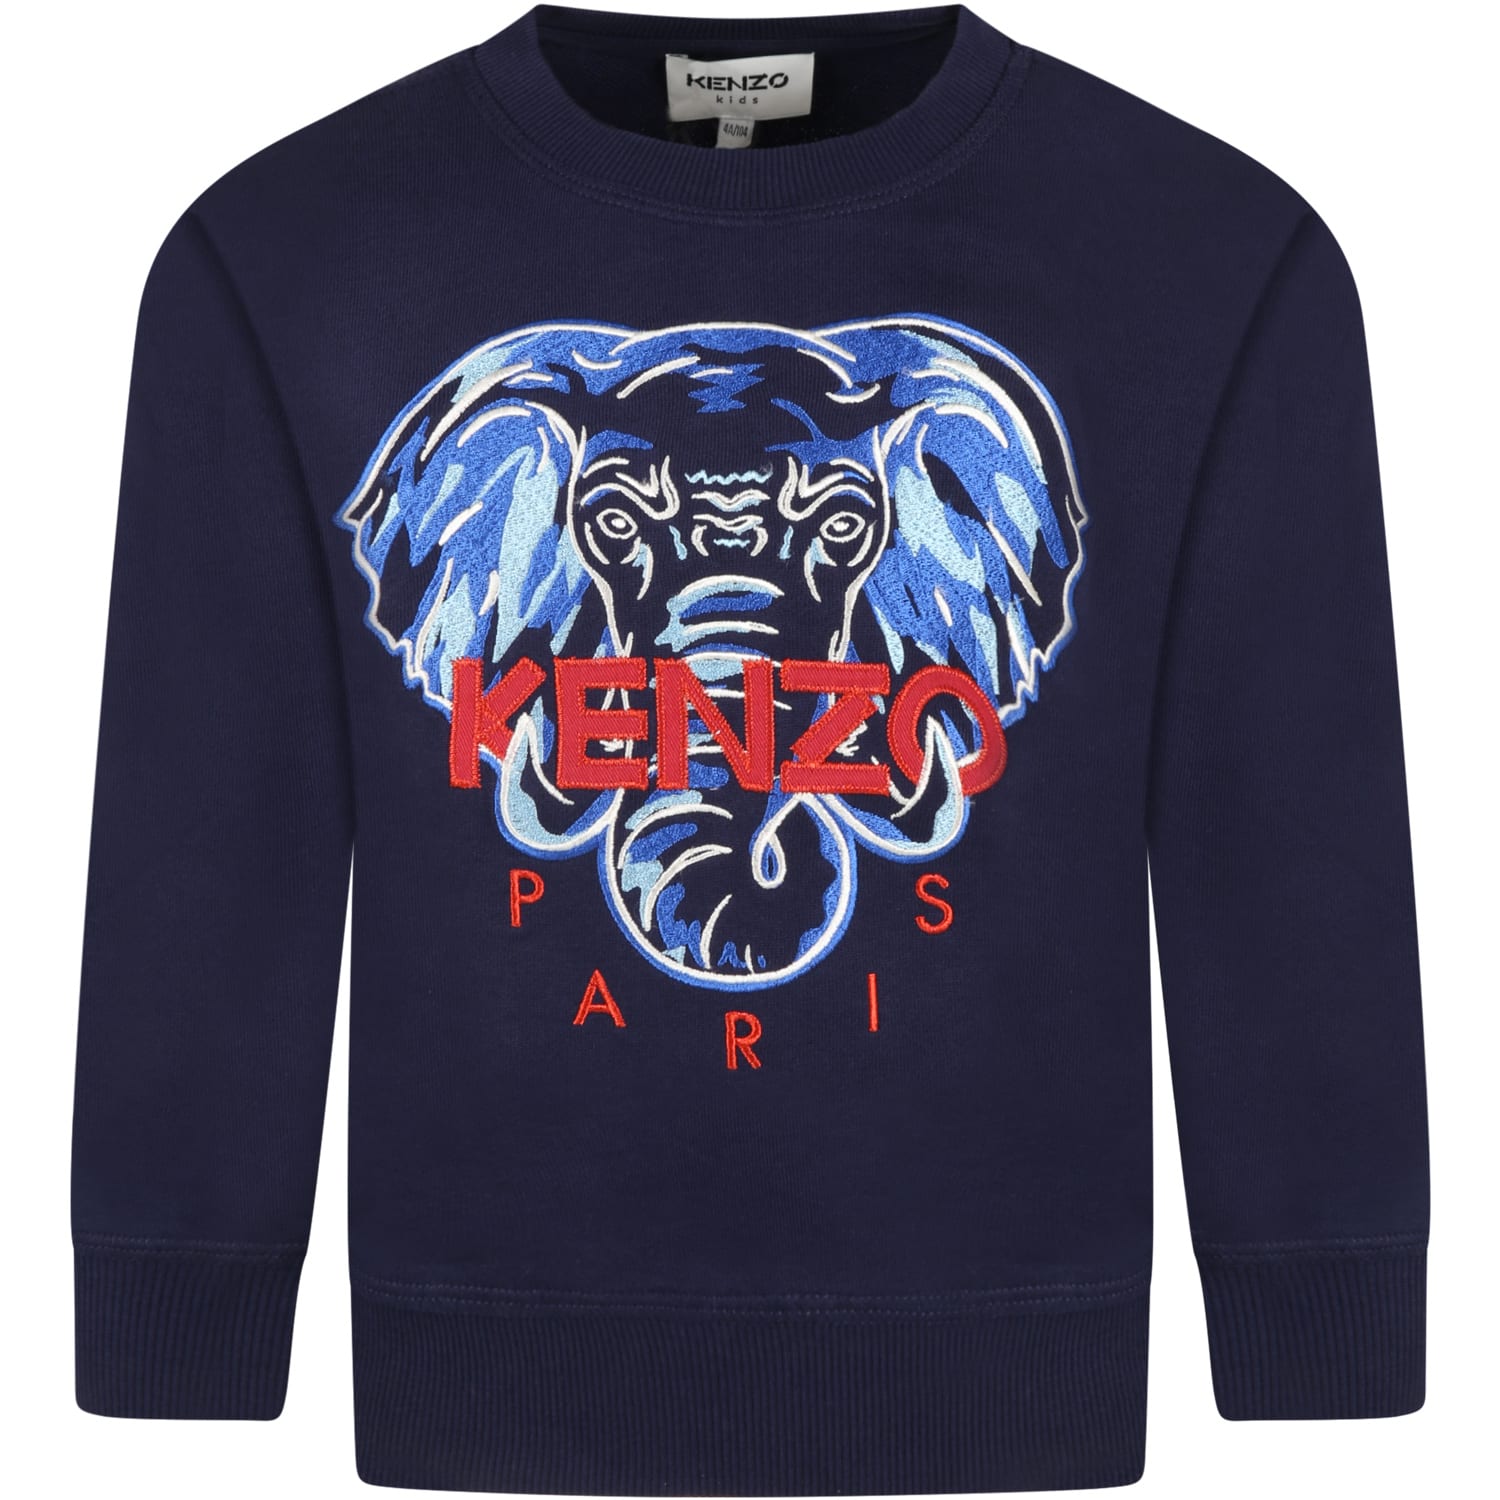 Kenzo Kids Blue Sweatshirt For Boy With Elephant